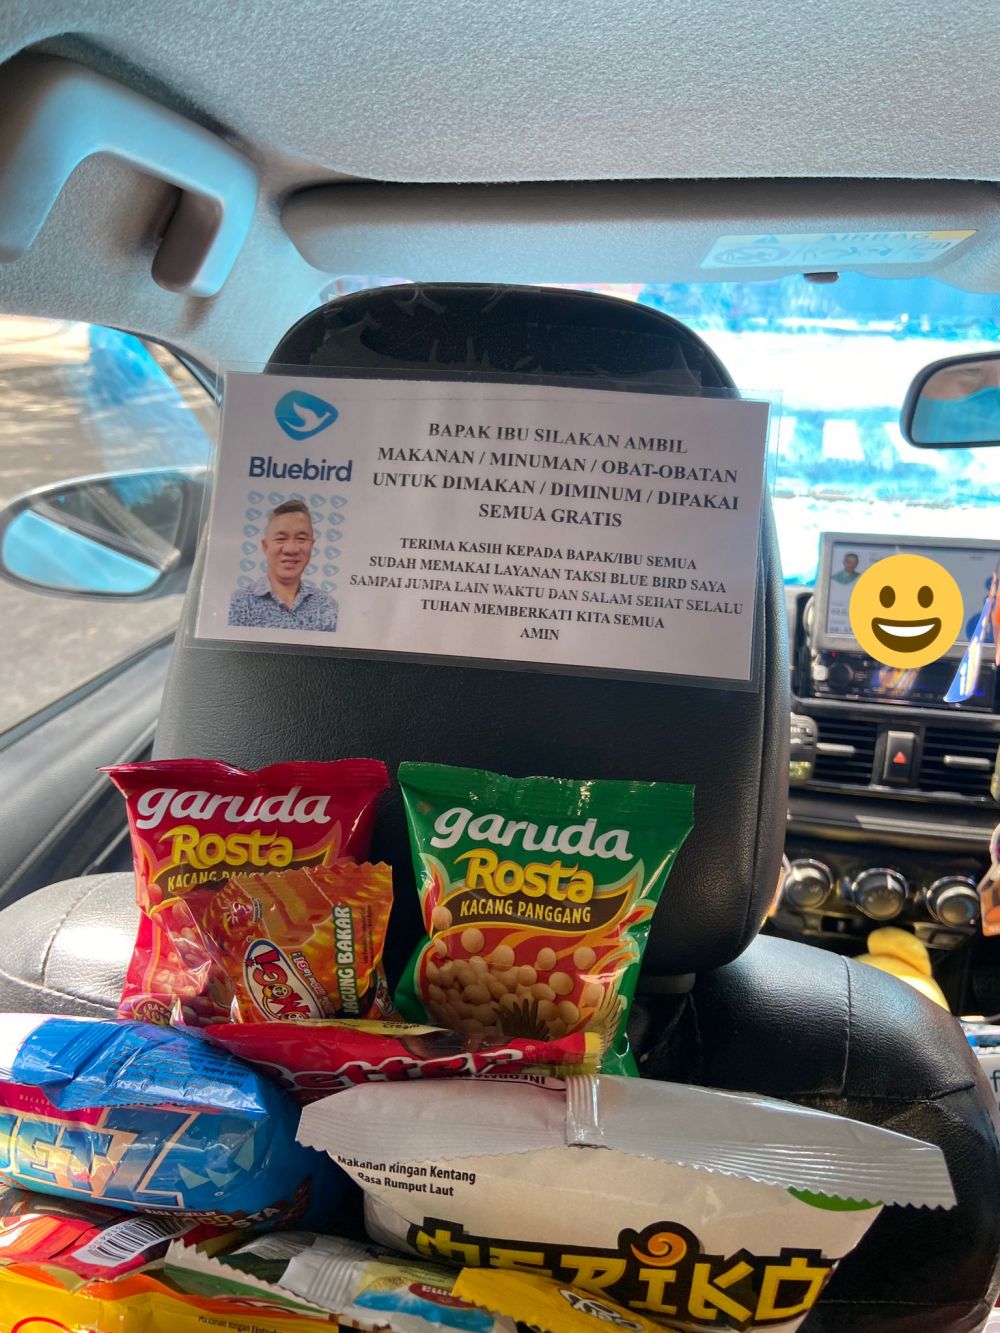 Sediakan snack & obat gratis, aksi driver taksi online ini bikin salut